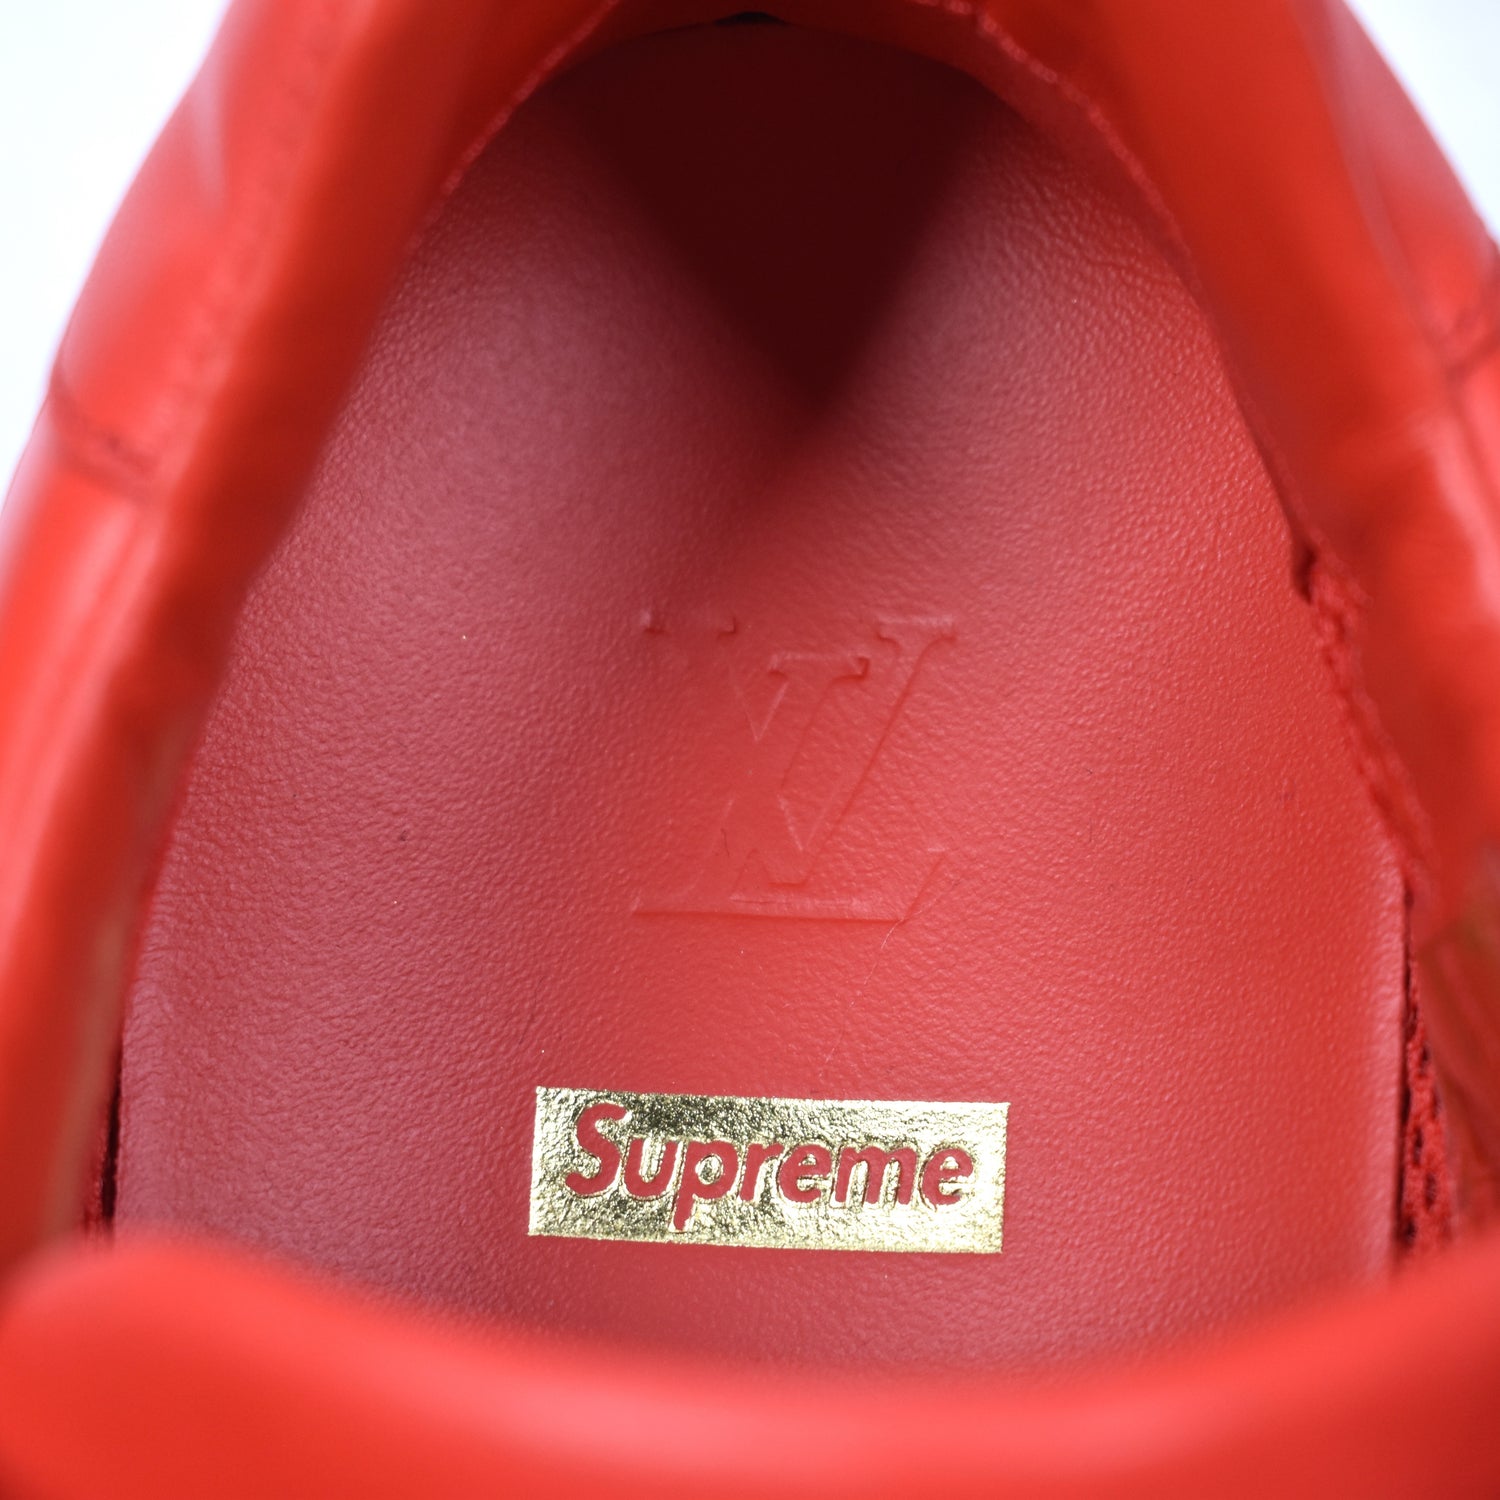 LOUIS VUITTON x SUPREME ✓Men's Red Leather Run Away Sneakers Sz LV7  Brand New✓